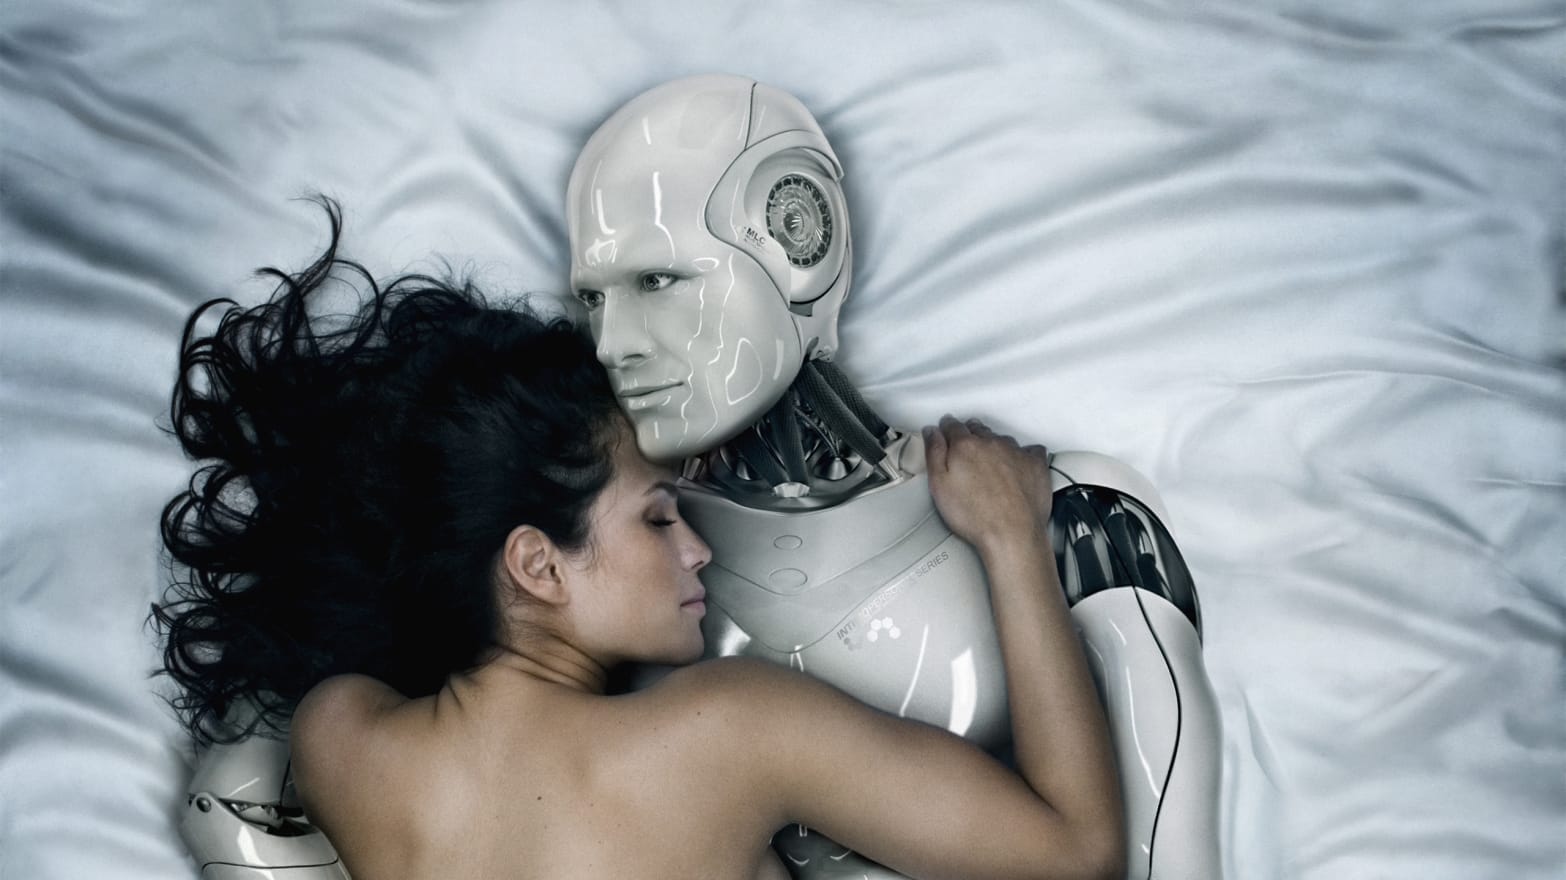 Sxe 2050 Com - Sex In 2050: More Robots, Less Humans